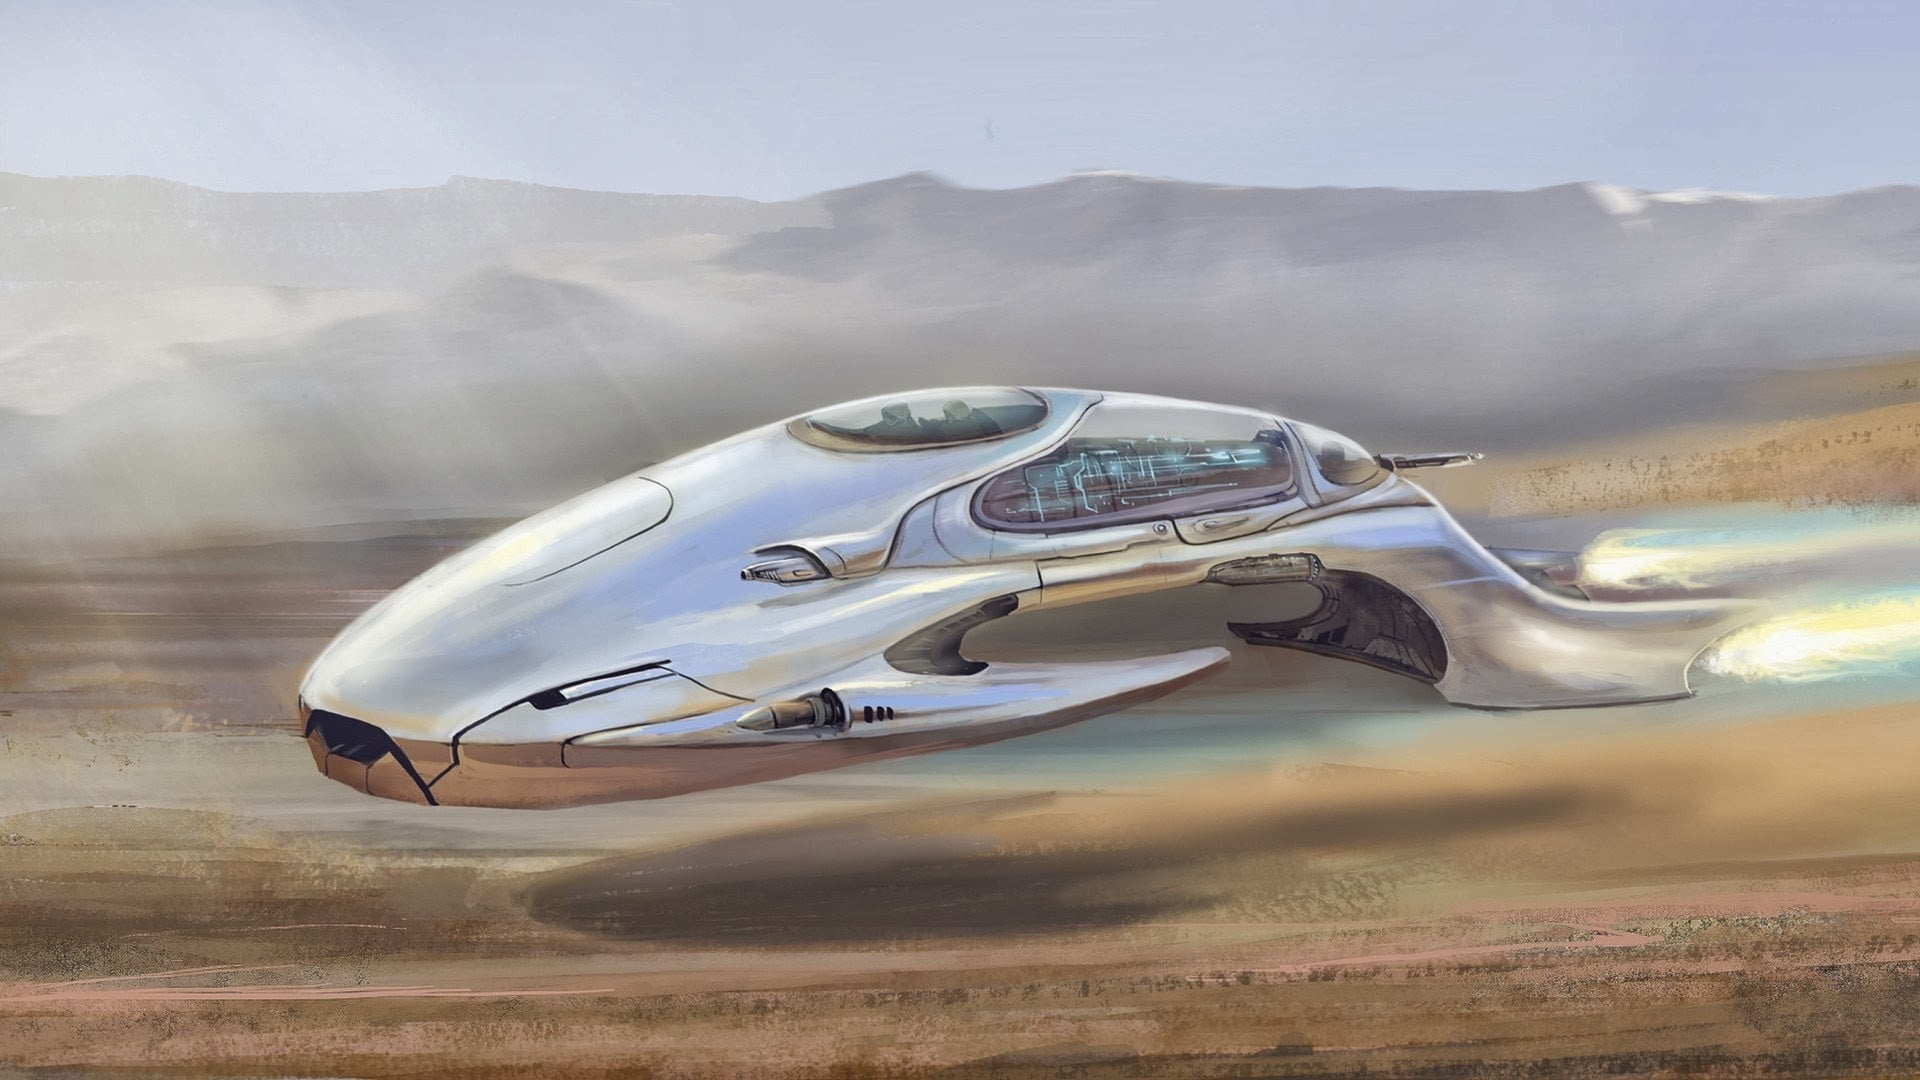 silver spaceship, futuristic, science fiction